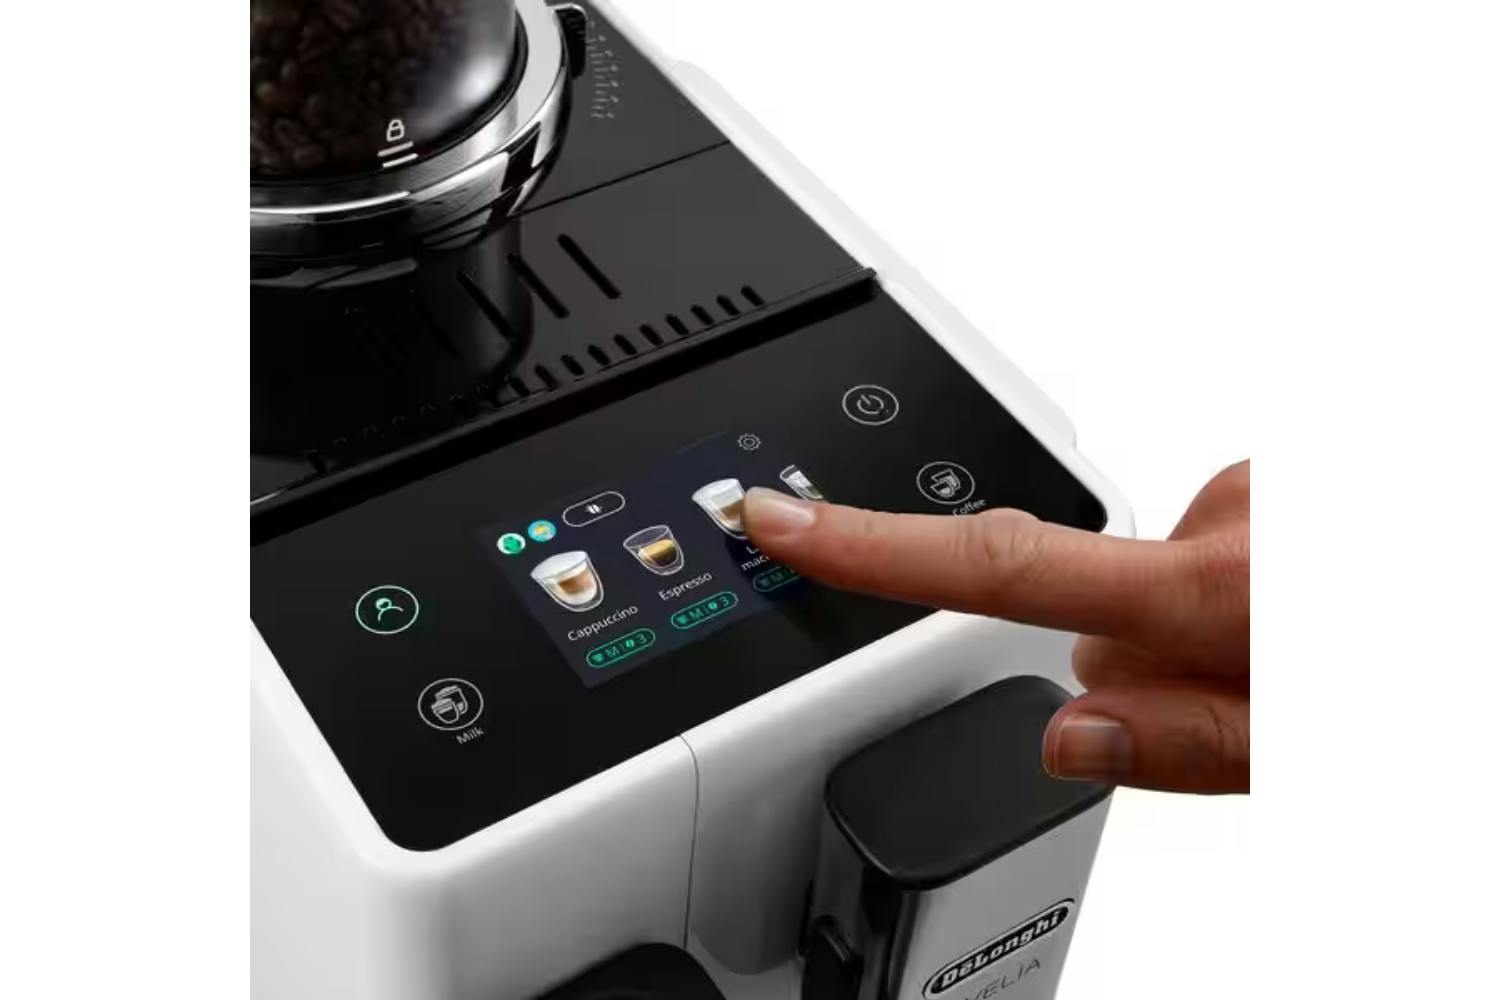 De'Longhi Rivelia review: finally – a compact, luxury bean-to-cup machine